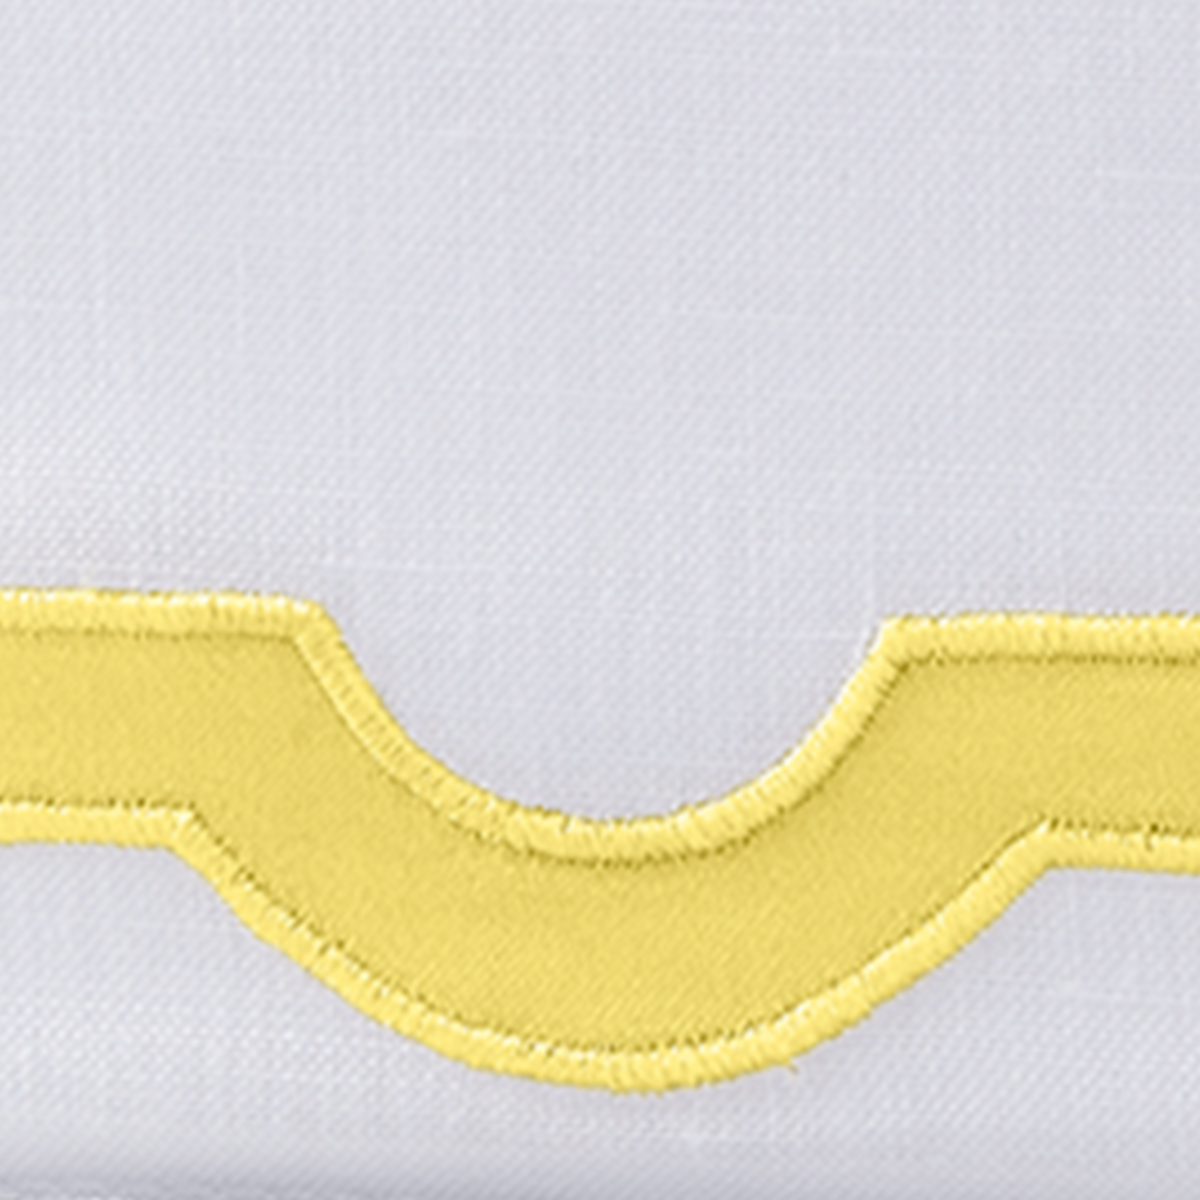 Swatch Sample of Matouk Mirasol Tissue Box Cover in Lemon Color